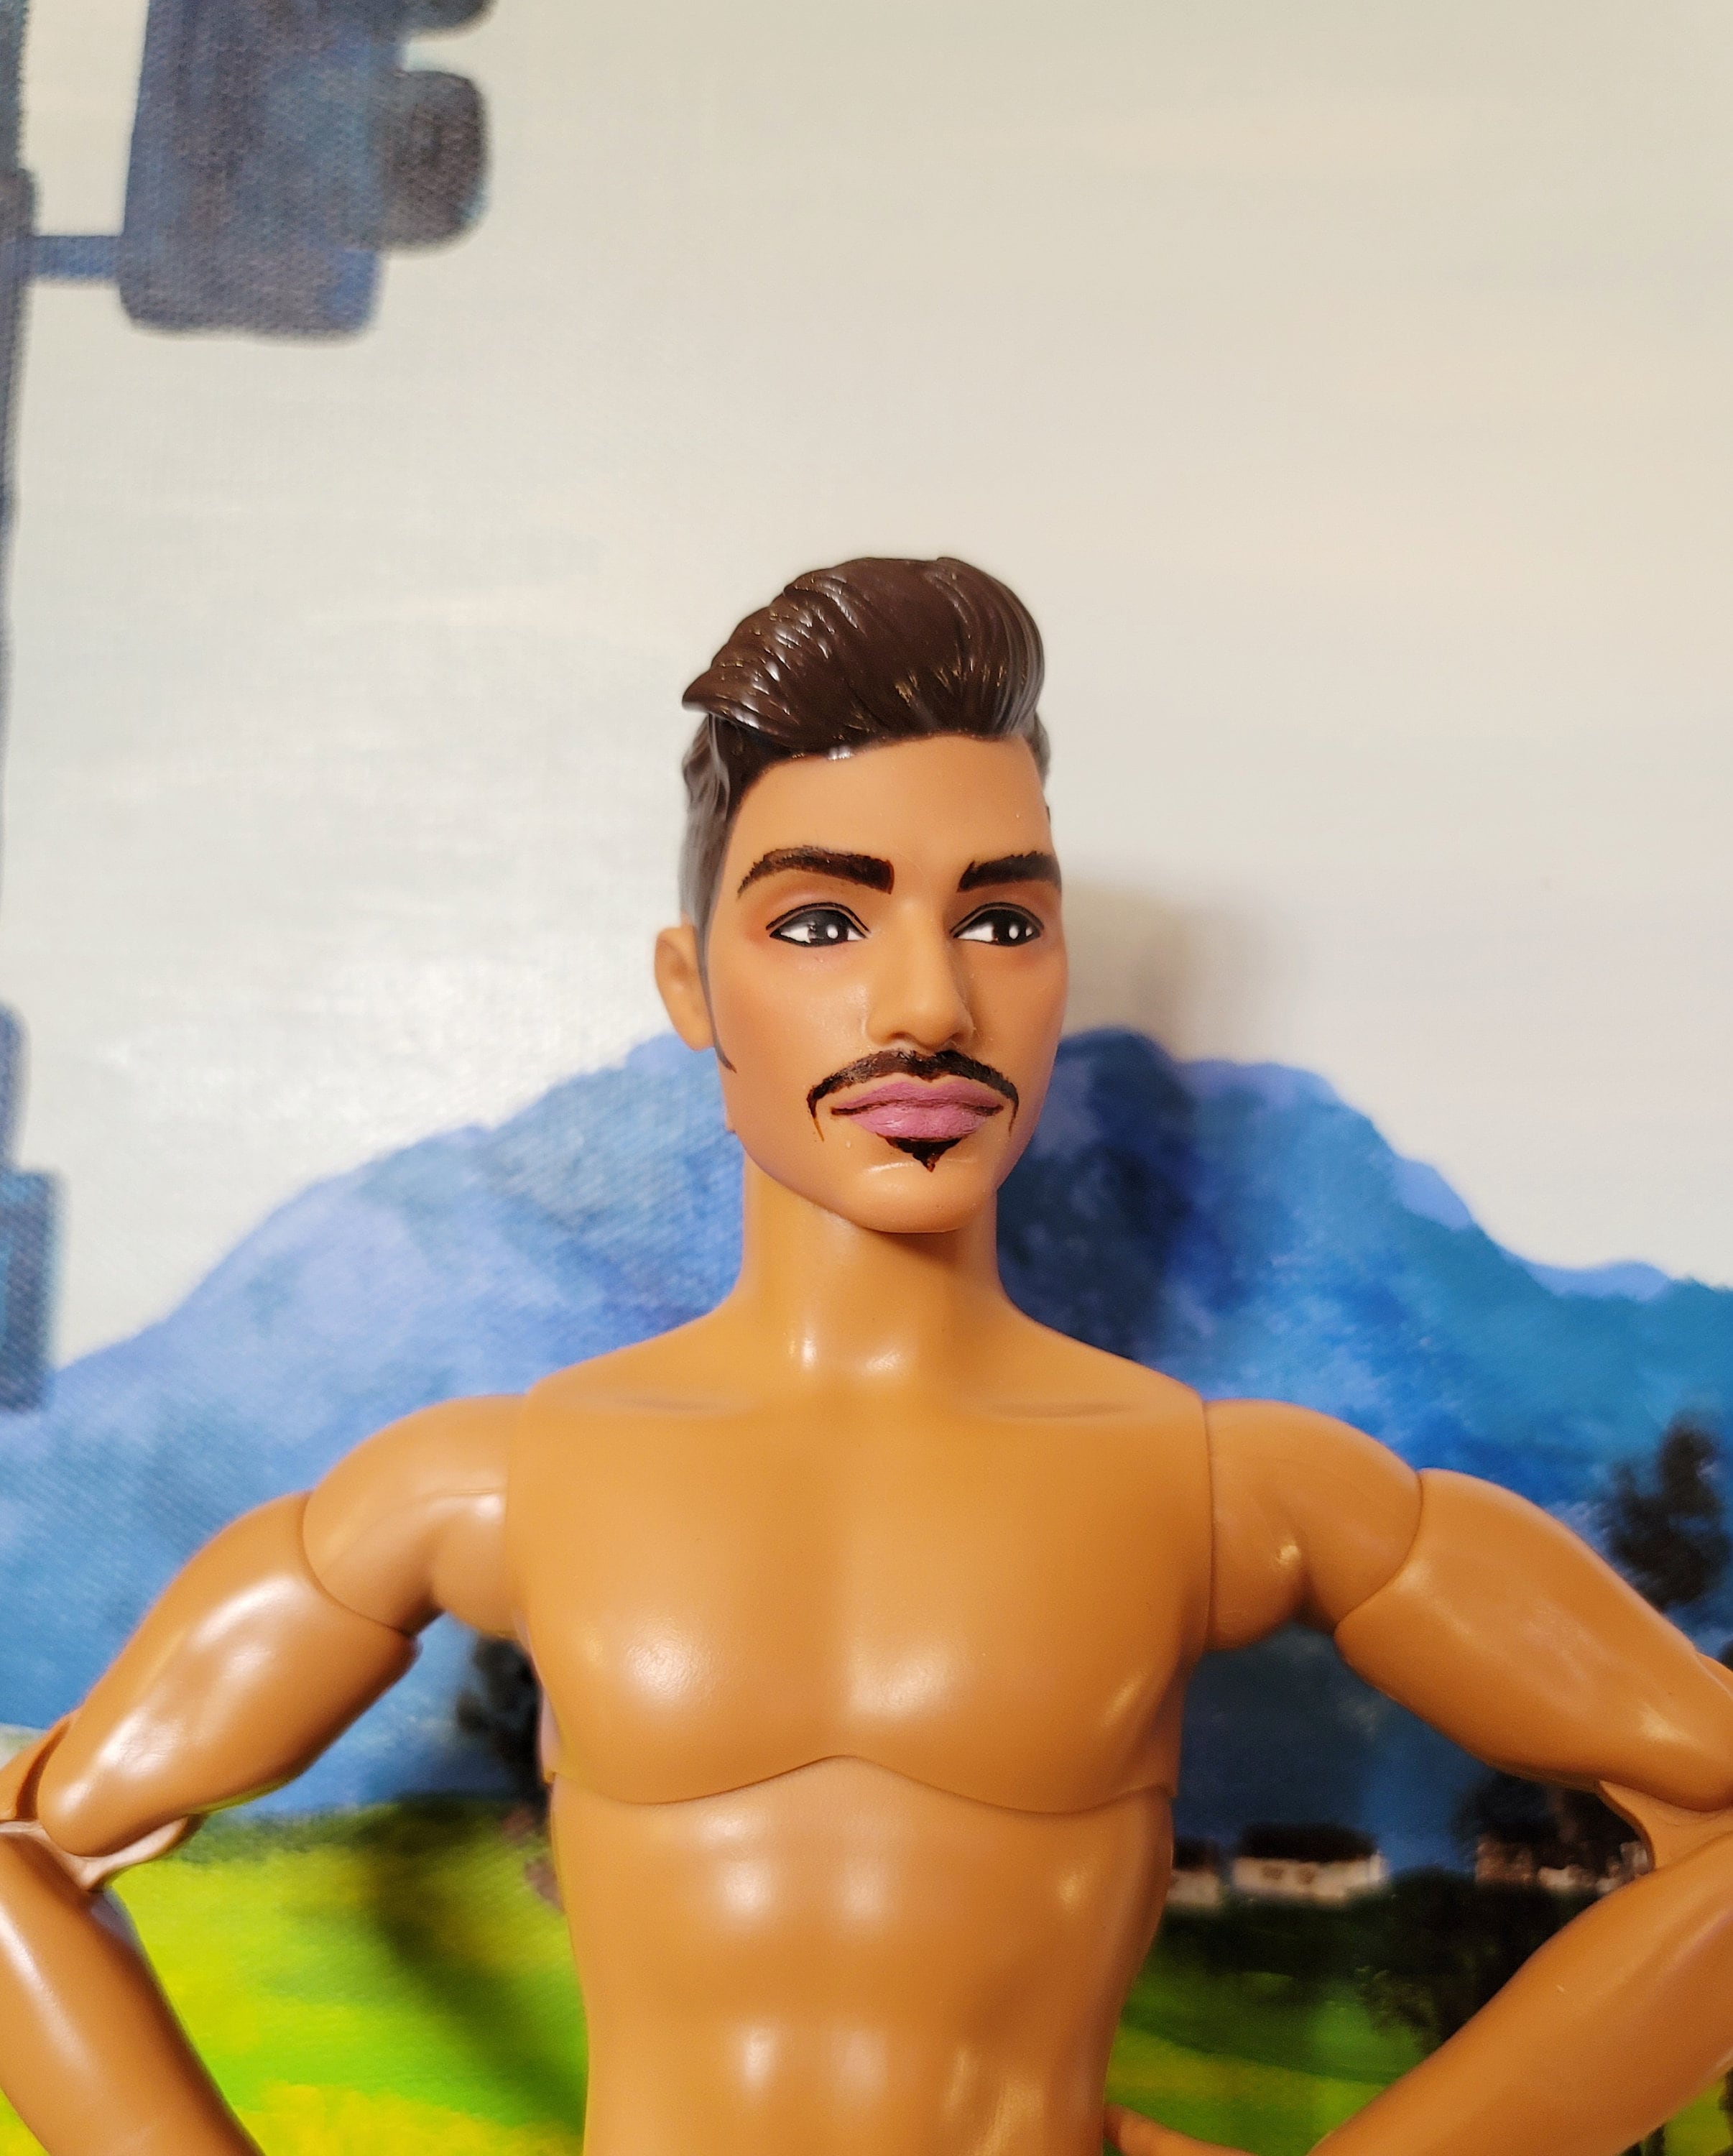 OOAK Barbie Ken Doll Repaint With Mustache picture